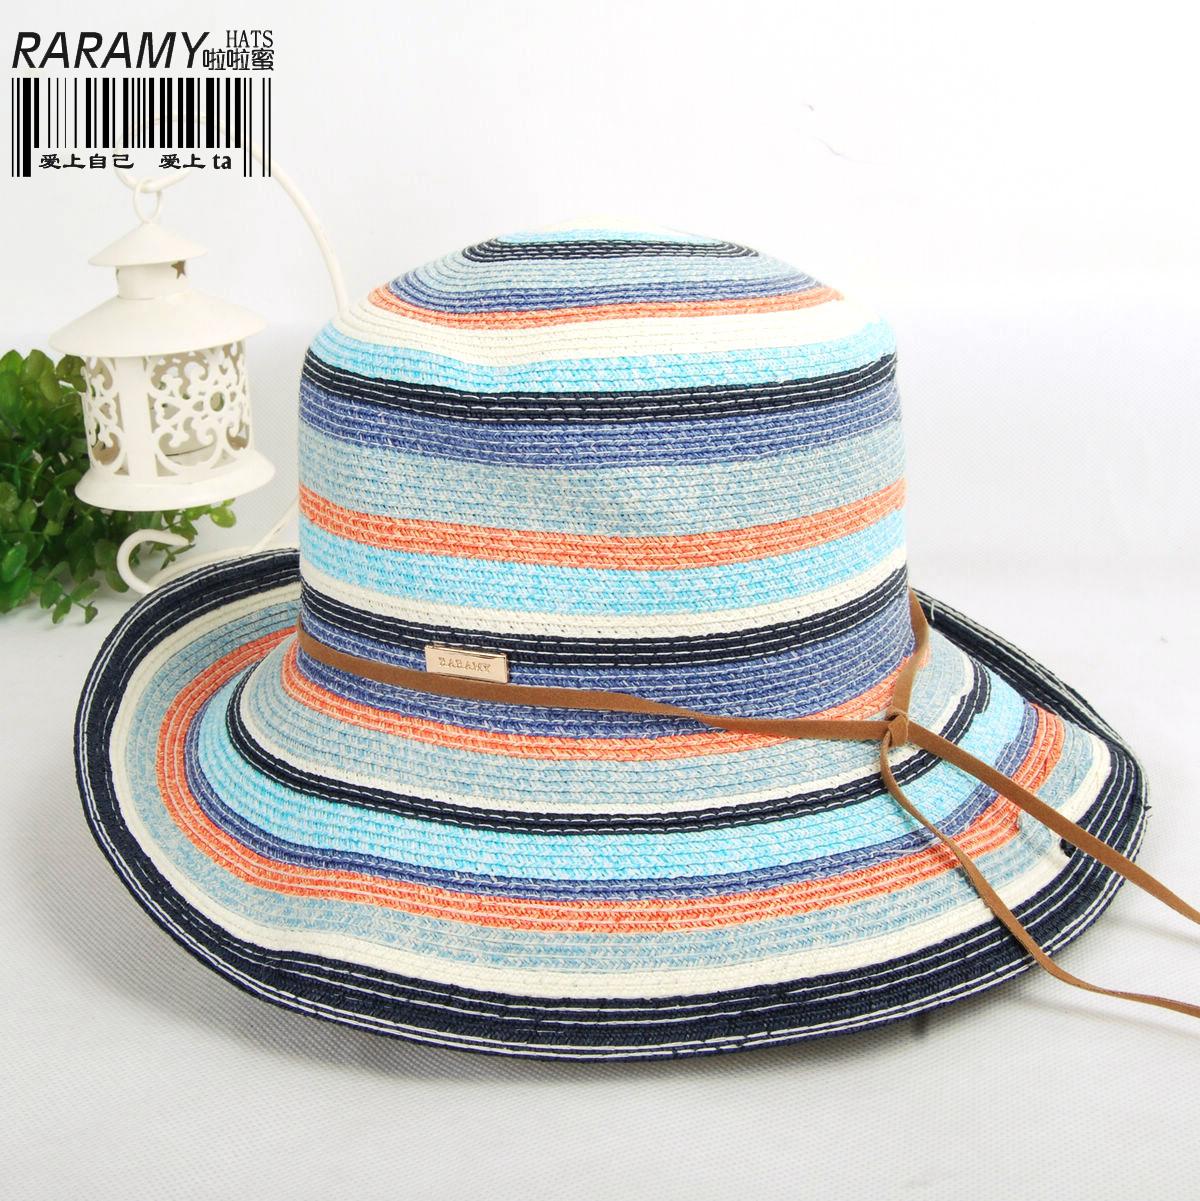 Honey strawhat women's hat straw braid hat spring and summer sunbonnet small bucket hat